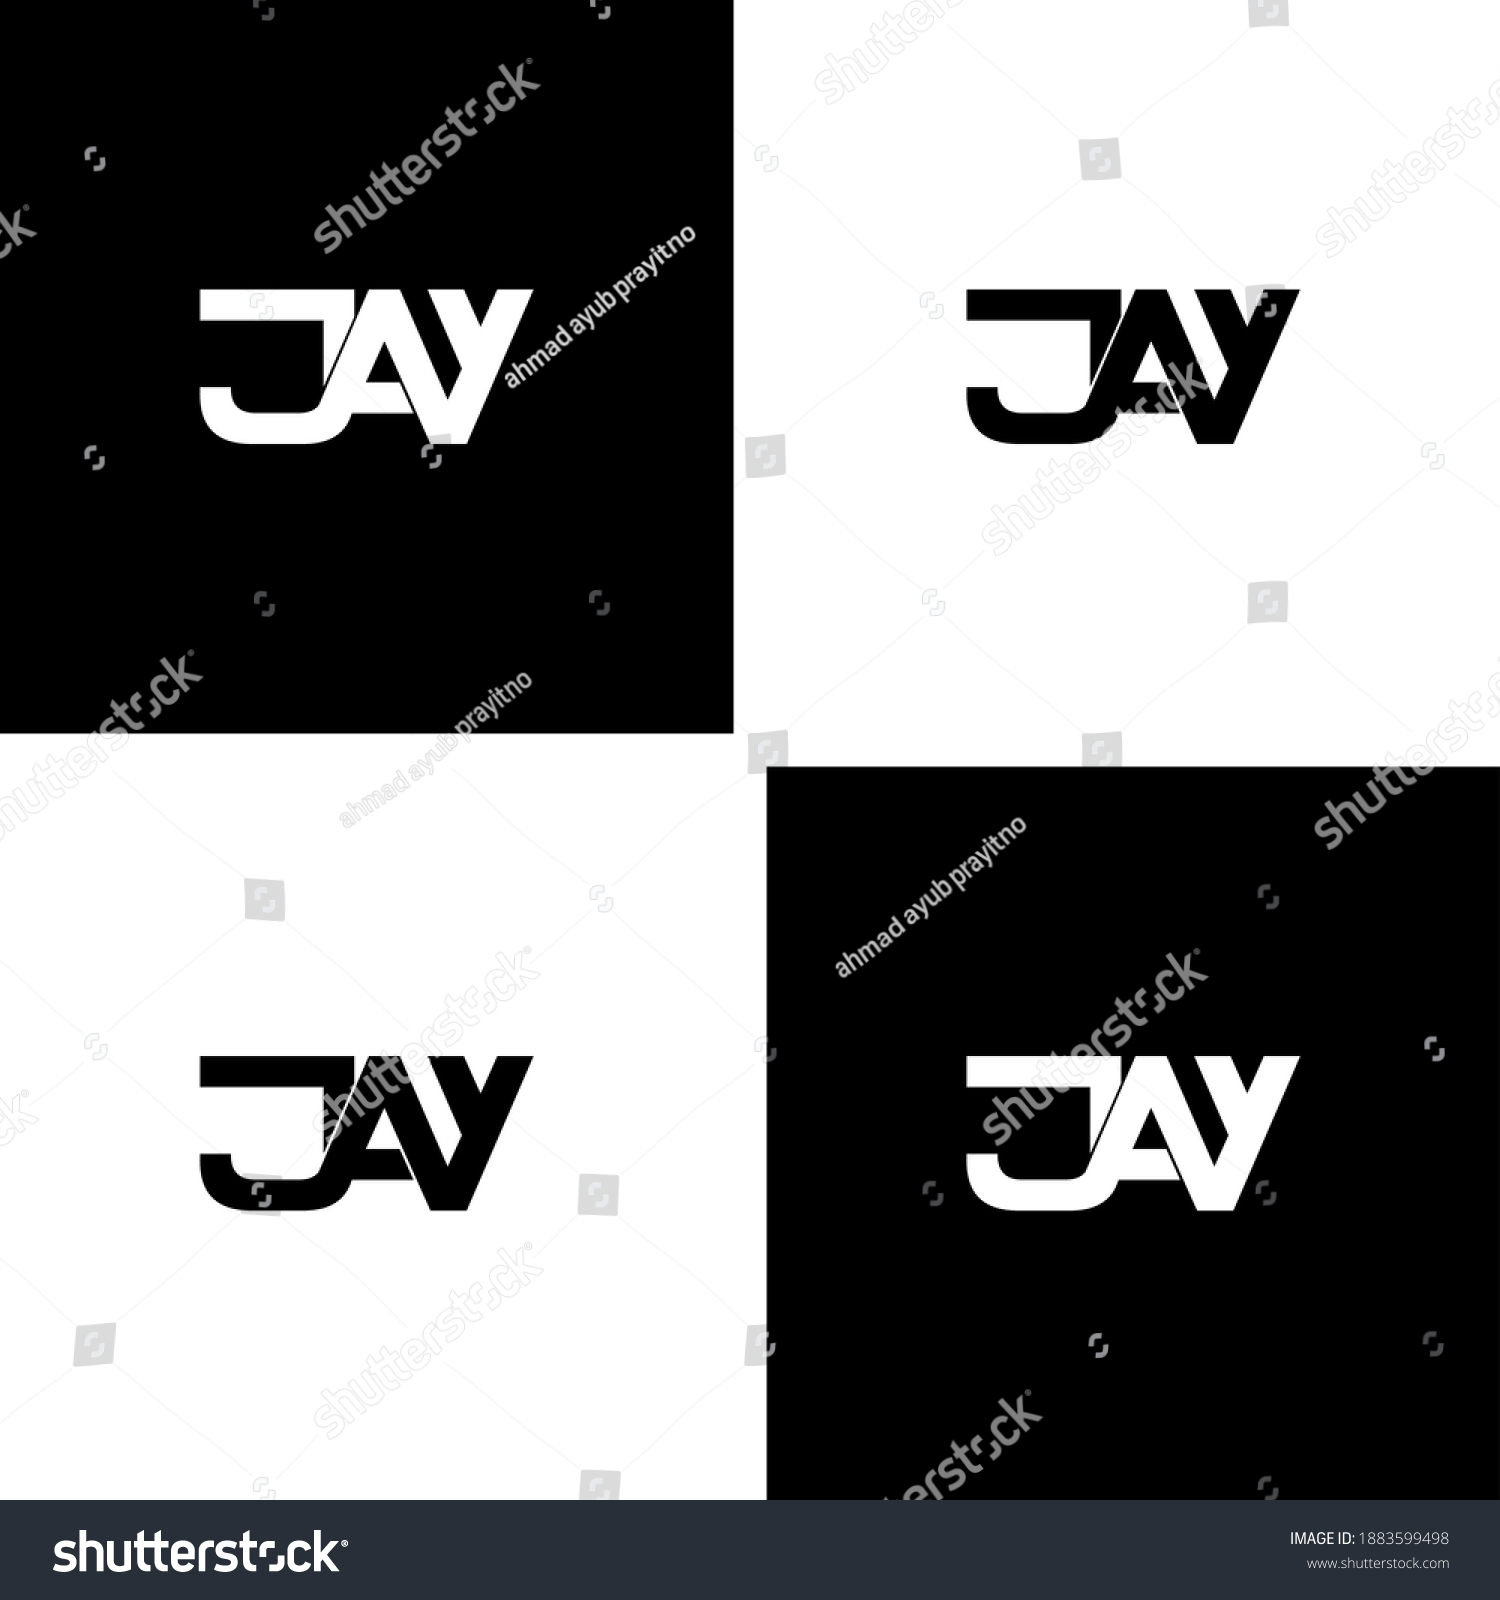 Jay Letter Original Monogram Logo Design เวกเตอรสตอก ปลอดคาลขสทธ Shutterstock